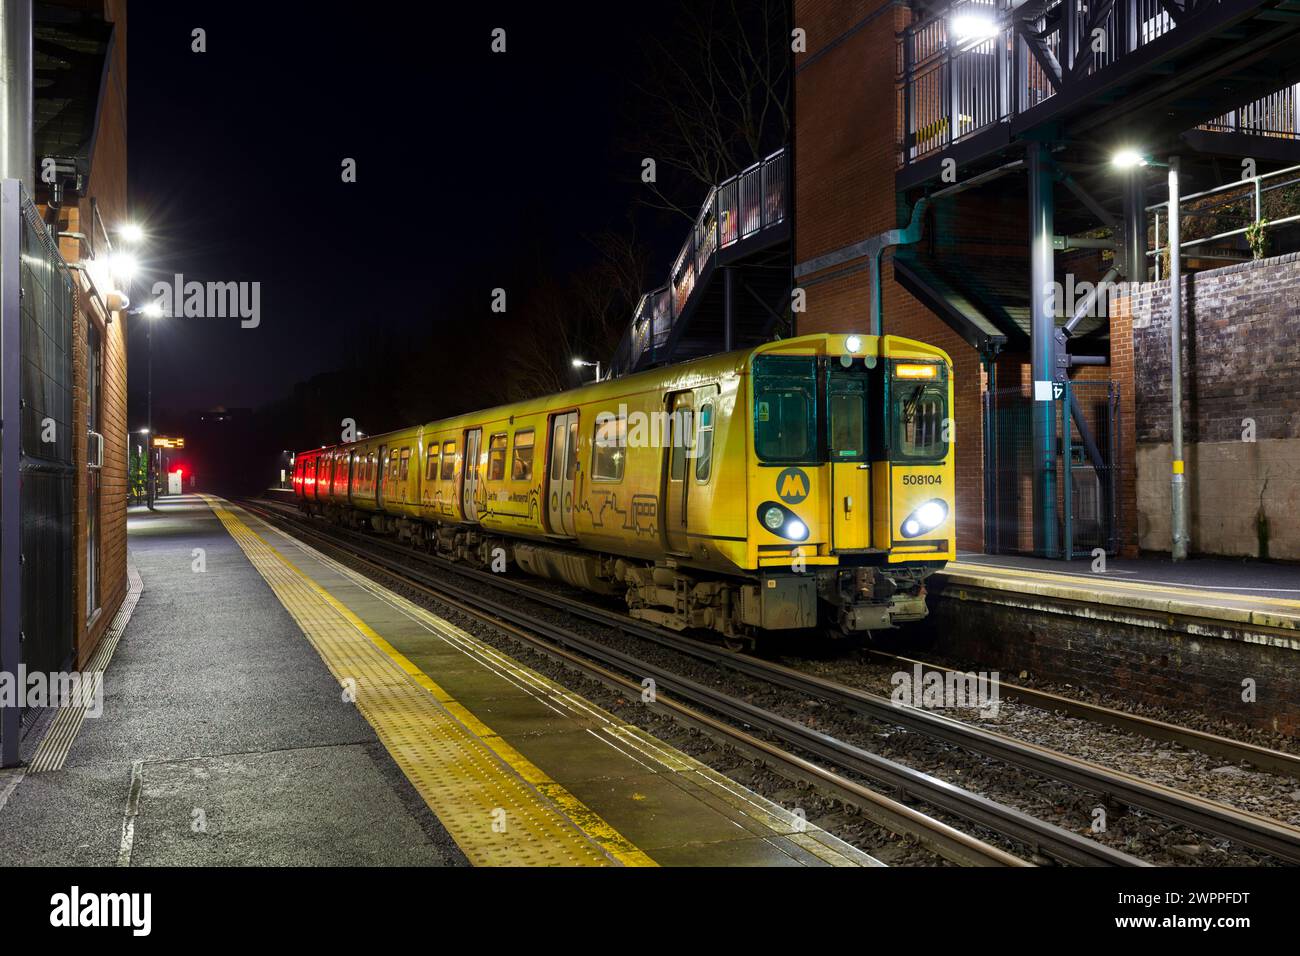 Merseyrail electrics class 508 third rail electric train 508104 at St Michaels railway station, Liverpool, UK at night Stock Photo